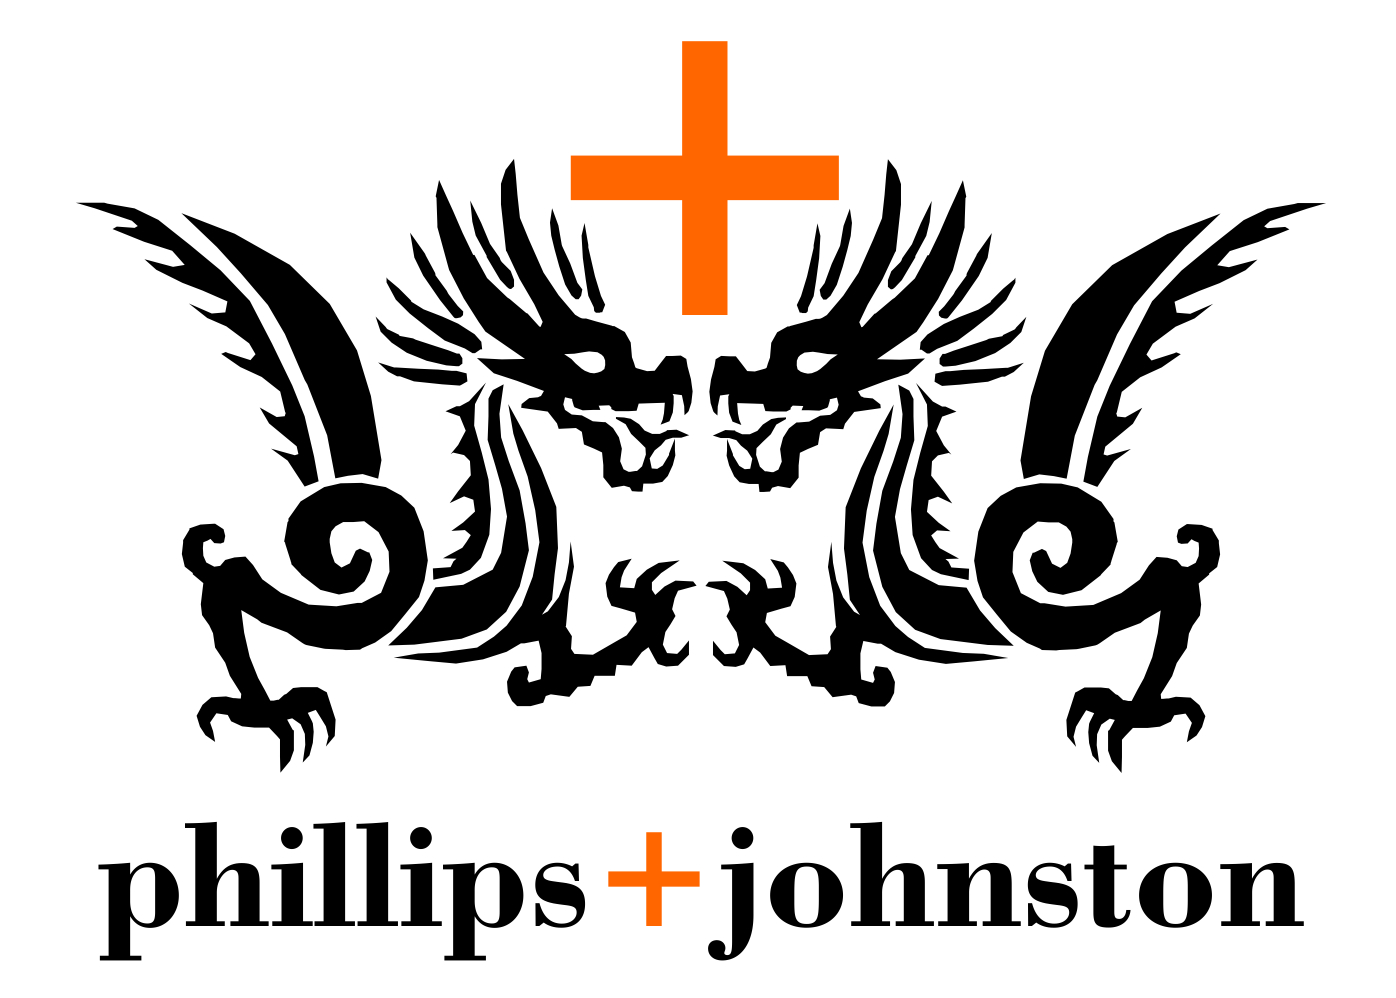 phillips + johnston